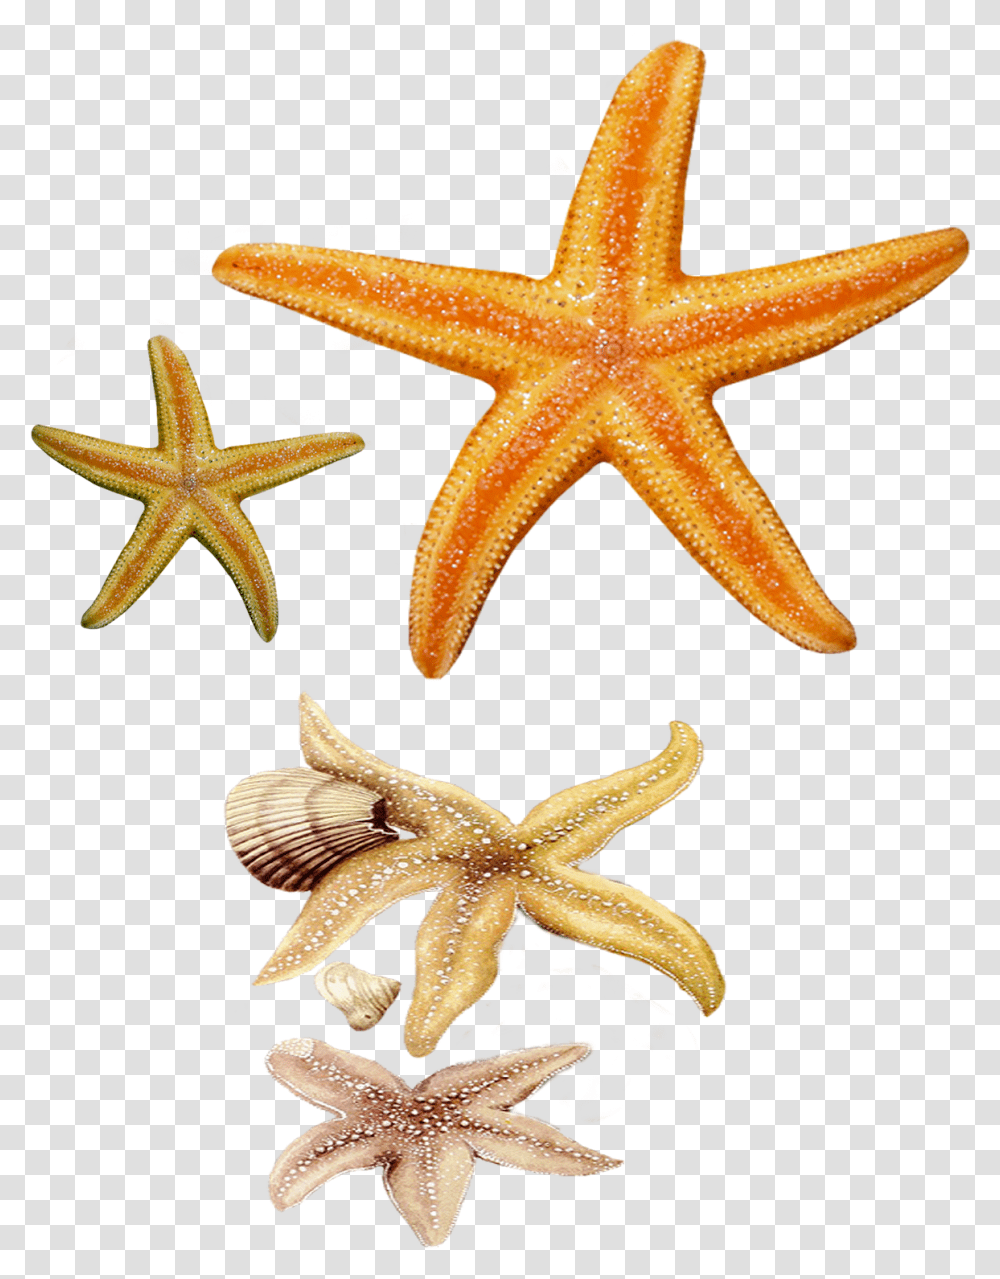 Star Fish Images And Clipart Free Fish Star, Starfish, Invertebrate, Sea Life, Animal Transparent Png